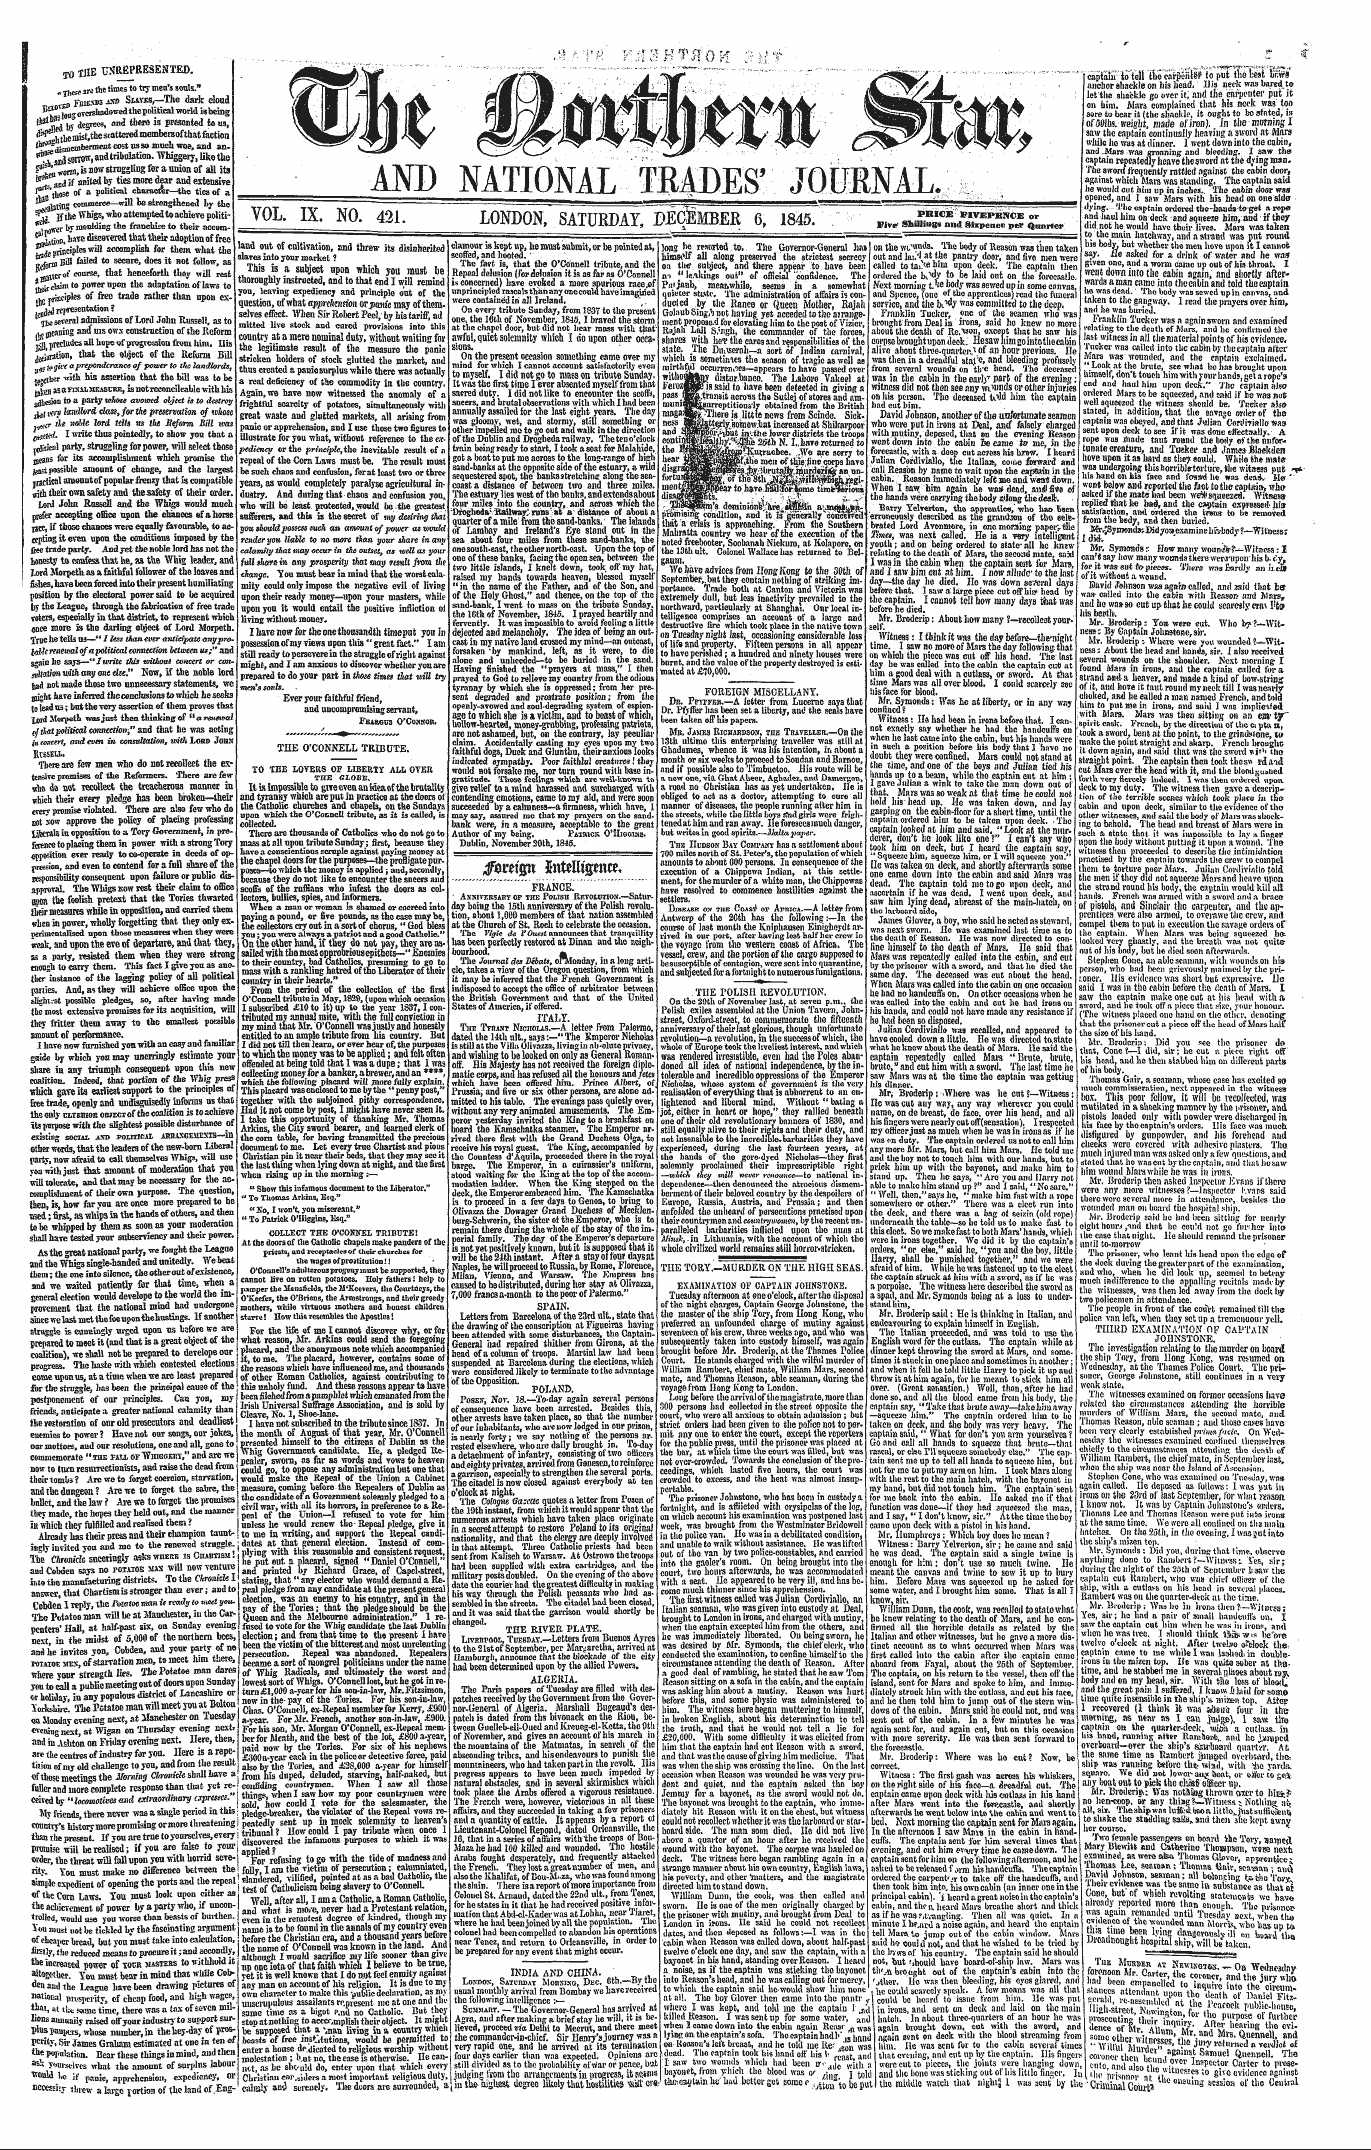 Northern Star (1837-1852): jS F Y, 3rd edition - Vol. Ix. Mo _ 421. London, Saturday, Pec...